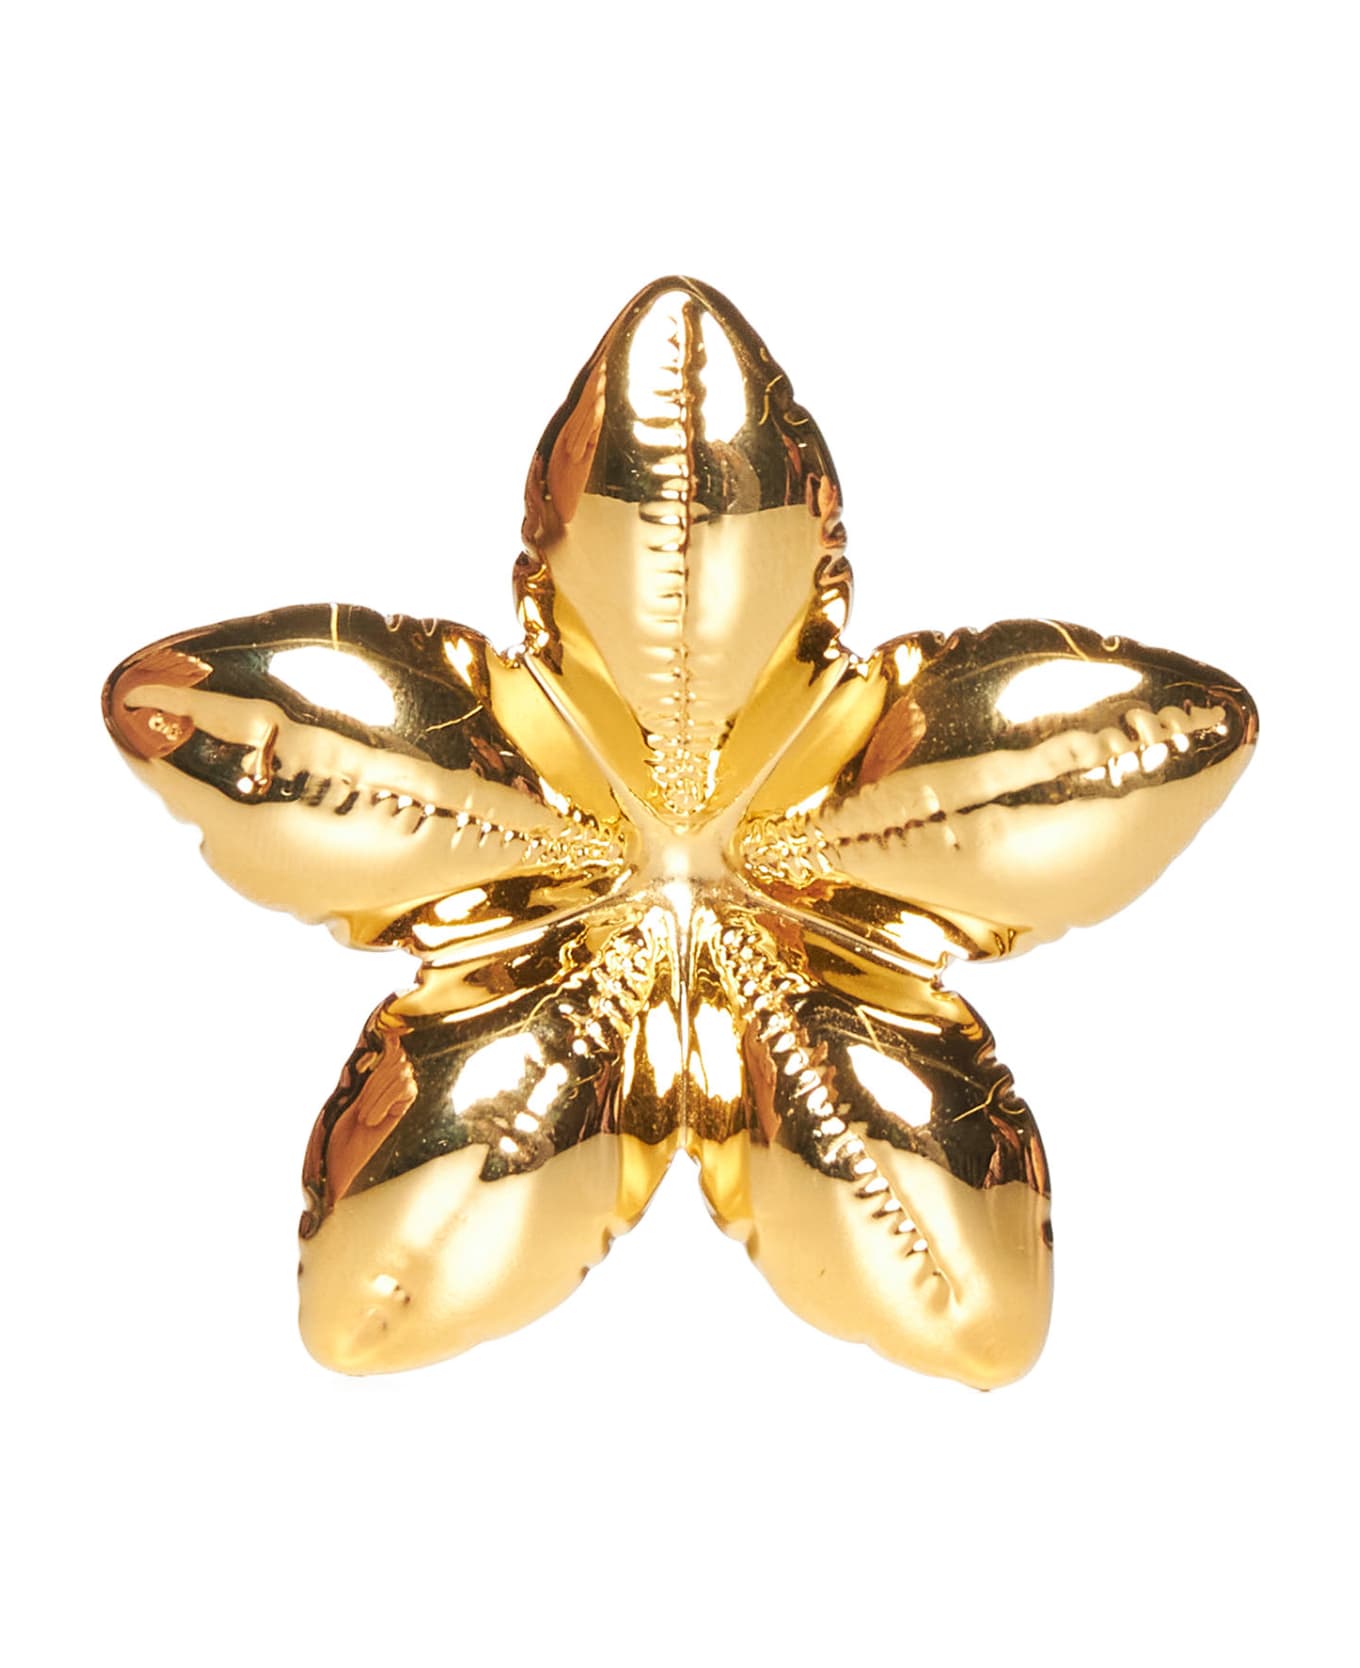 Marni Flower Shaped Earrings - Gold イヤリング